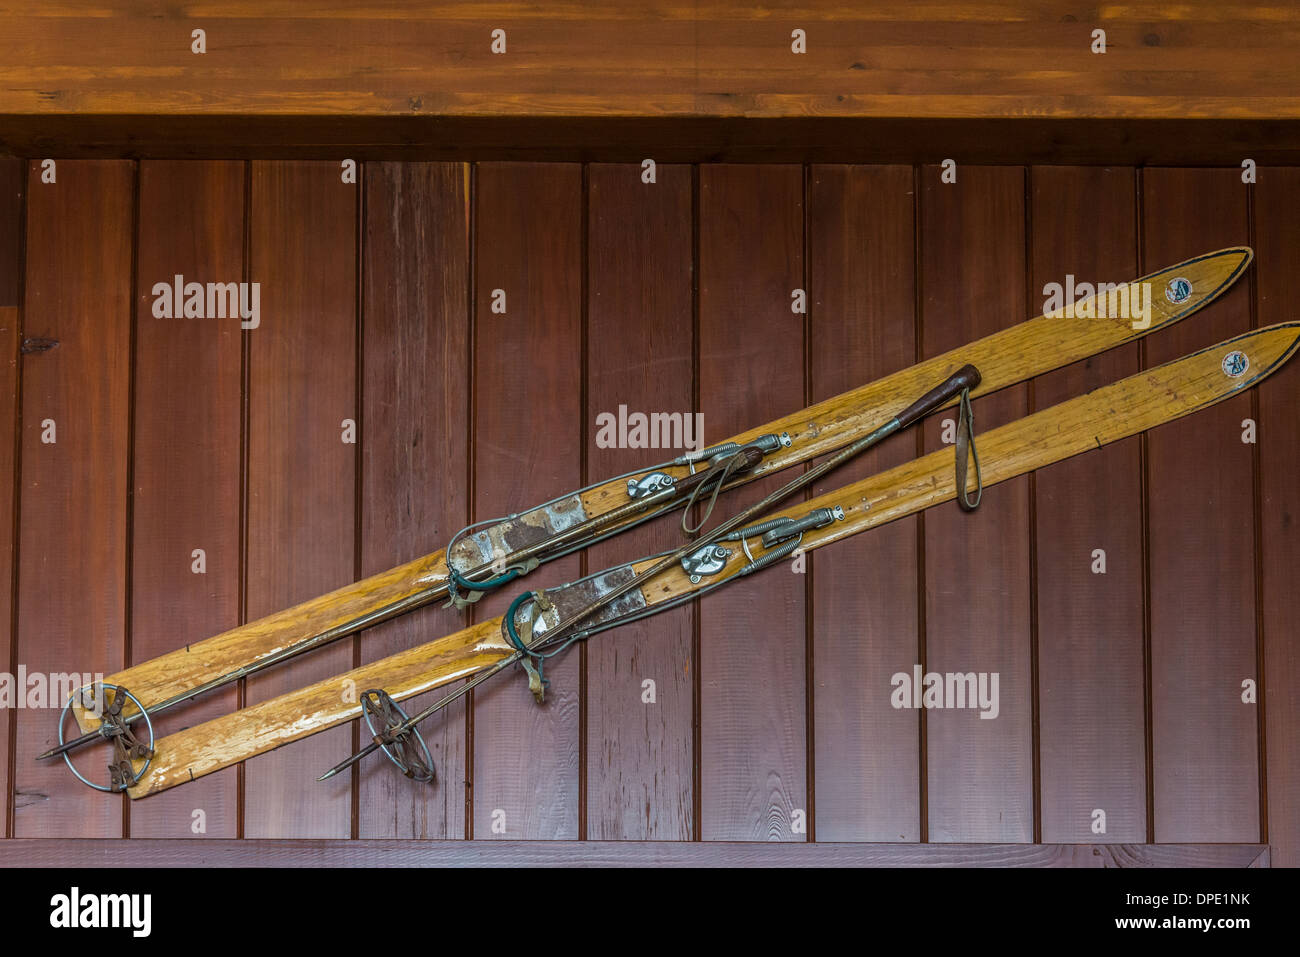 How To Hang Vintage Skis On Wall - Vintage Render